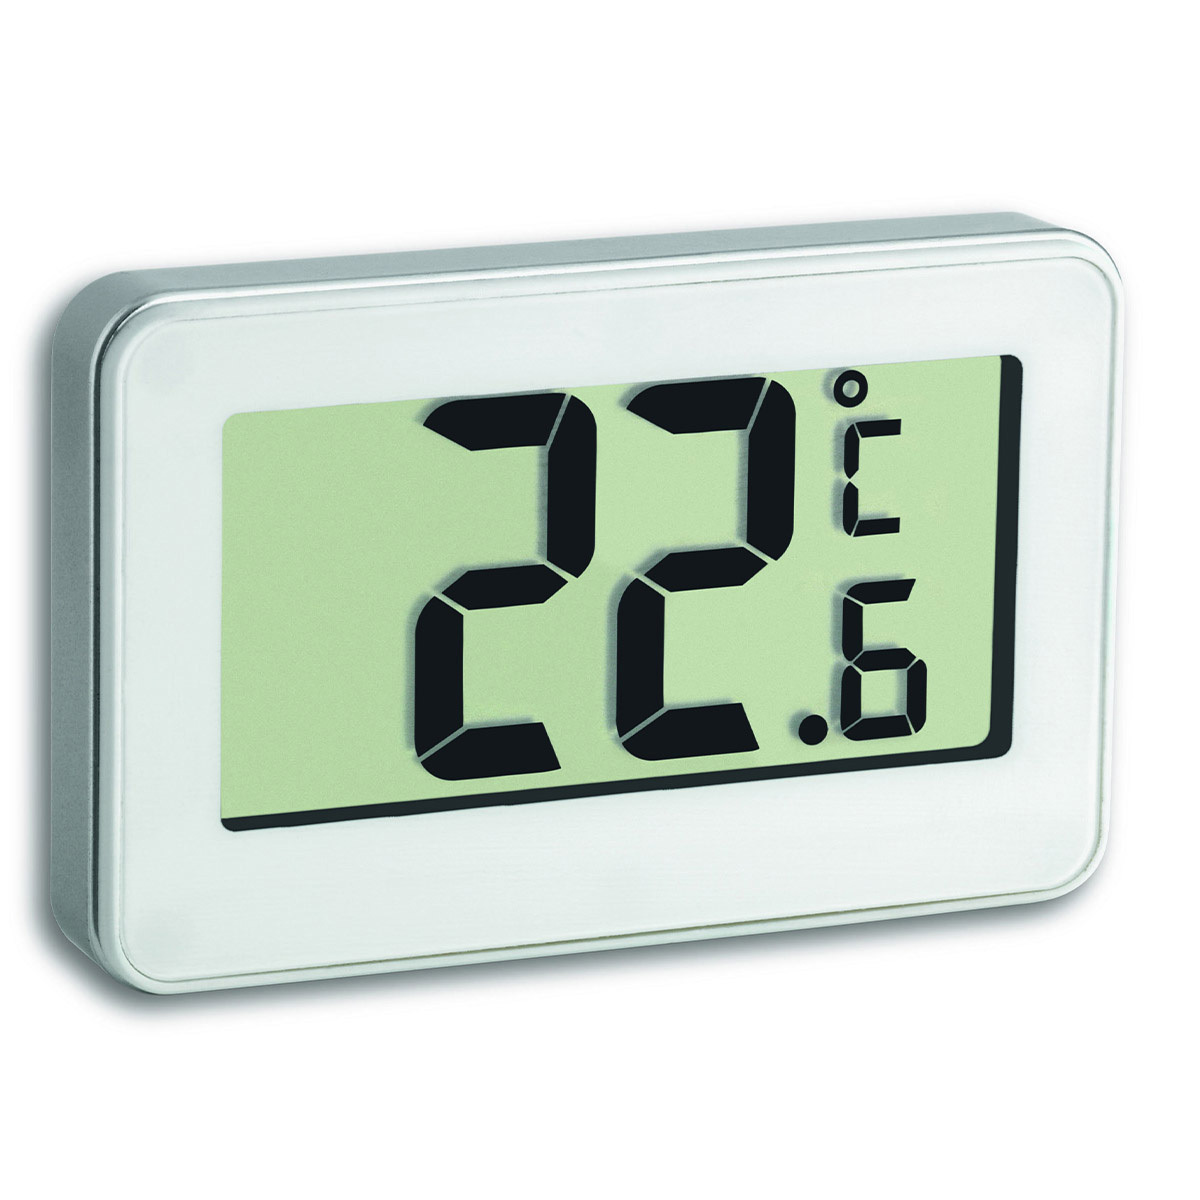 30-2028-02-digitales-thermometer-ansicht1-1200x1200px.jpg